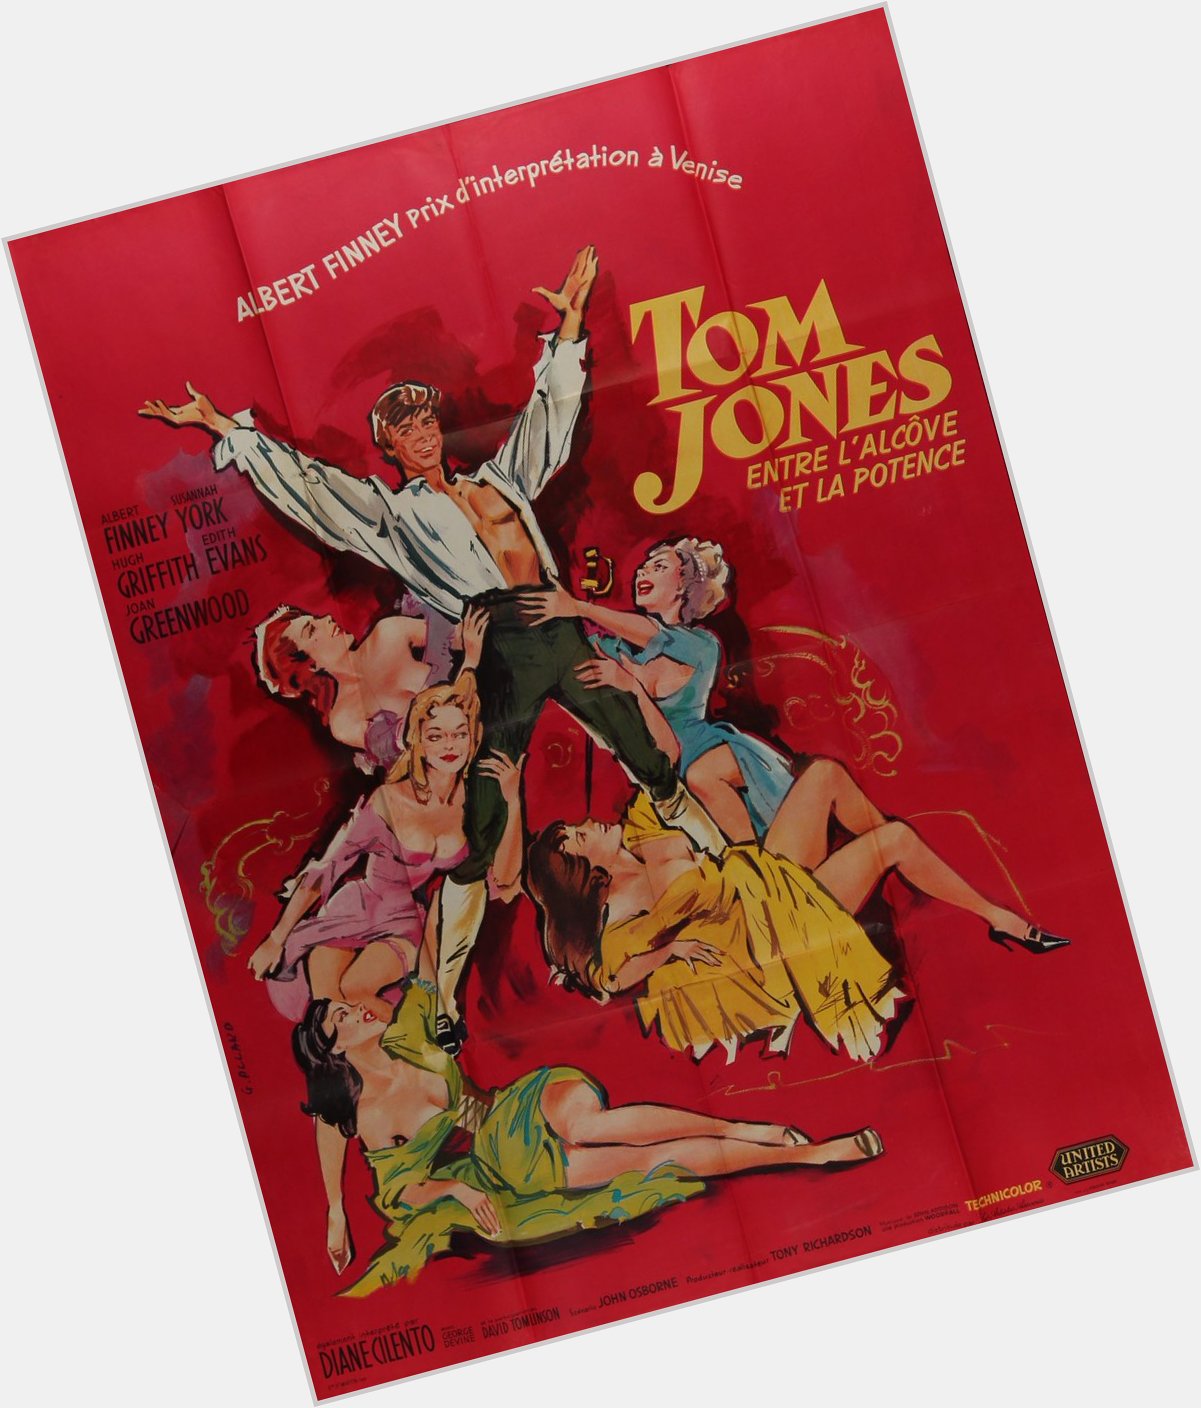 Happy Birthday Albert Finney - TOM JONES - 1963 - French release poster 